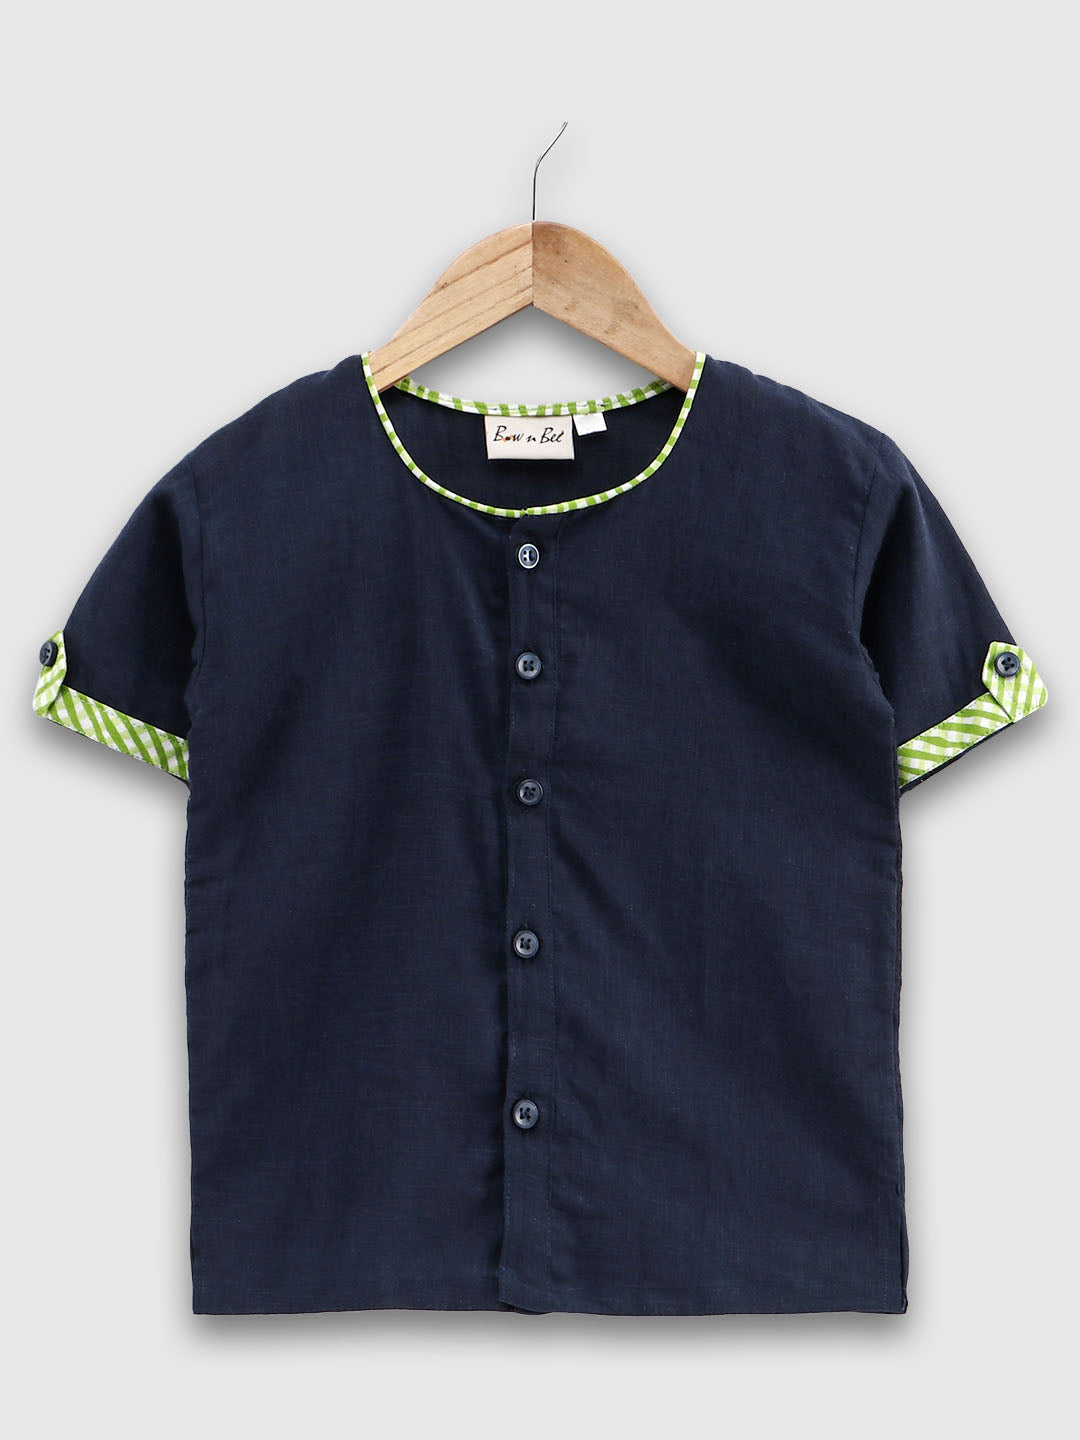 BownBee Cotton Half Sleeve Shirt For Baby Boys- Blue